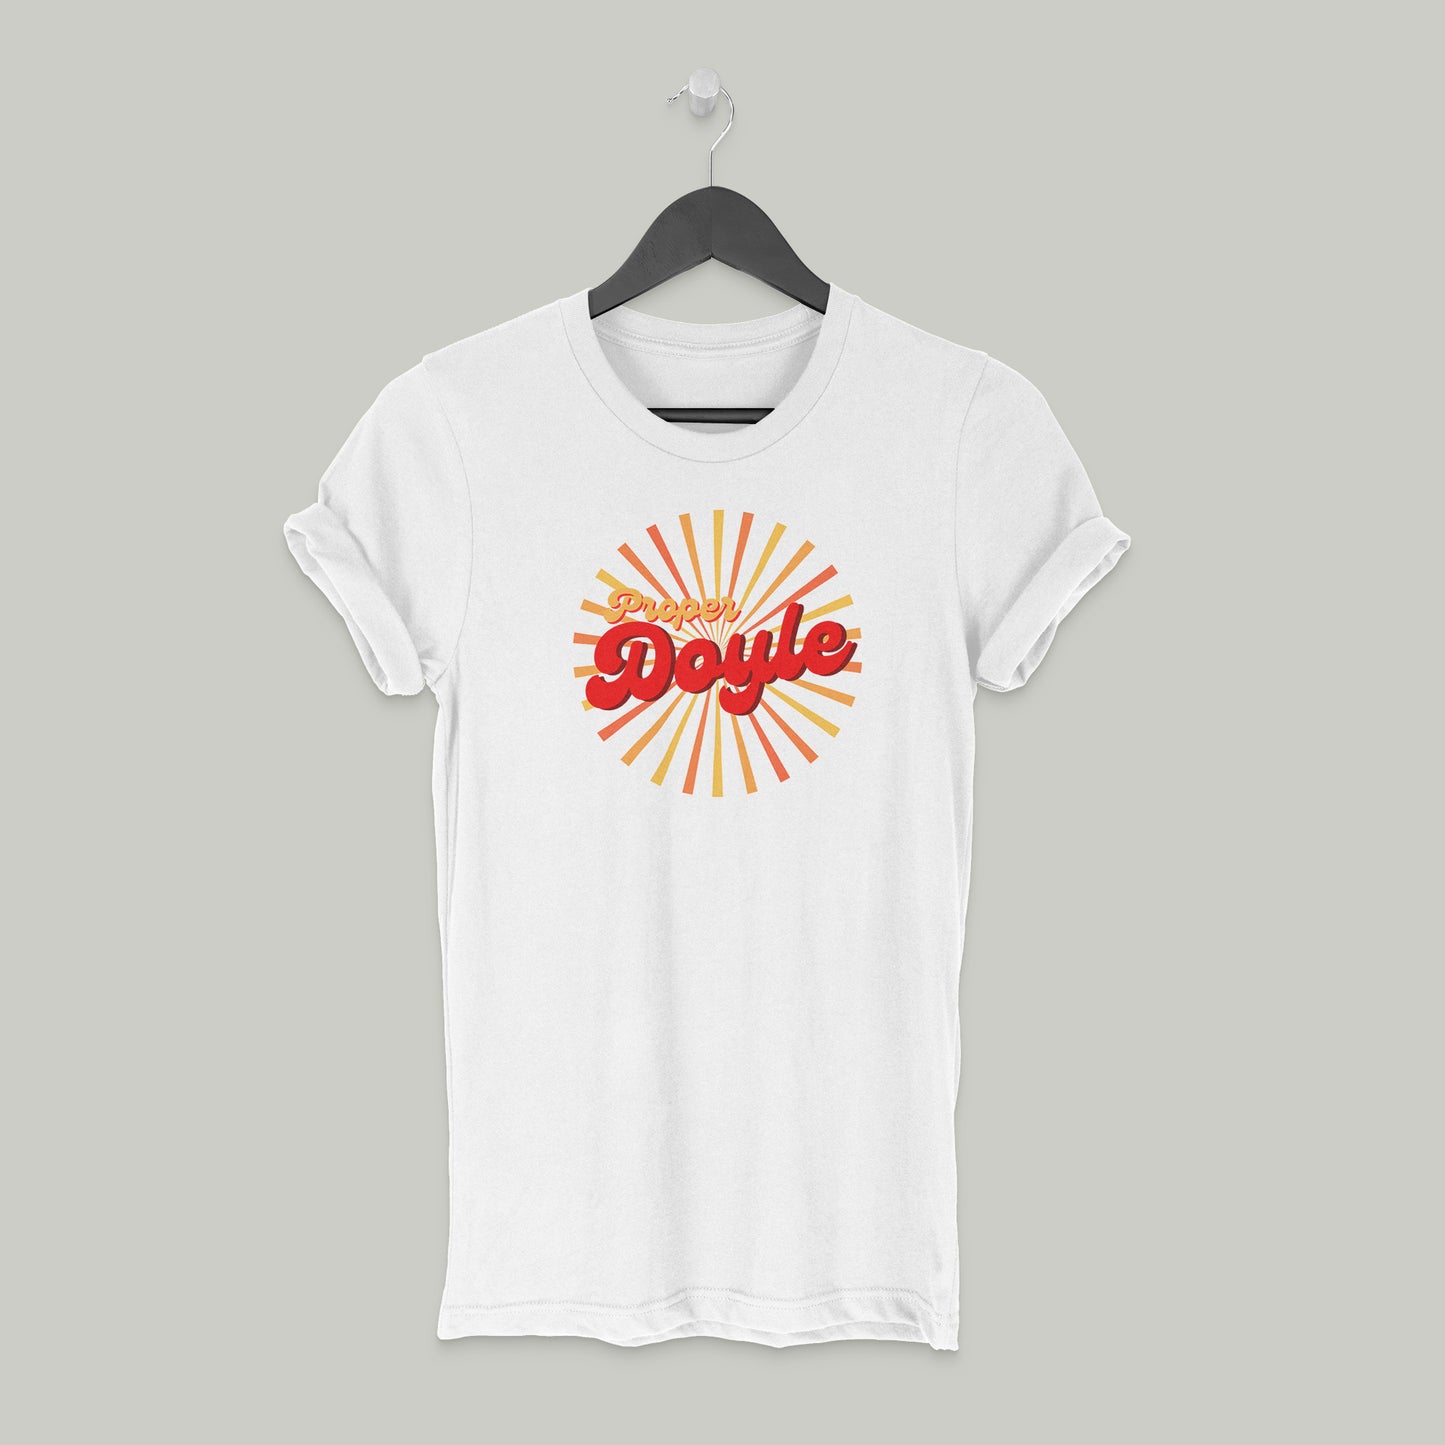 Proper Doyle T-Shirt